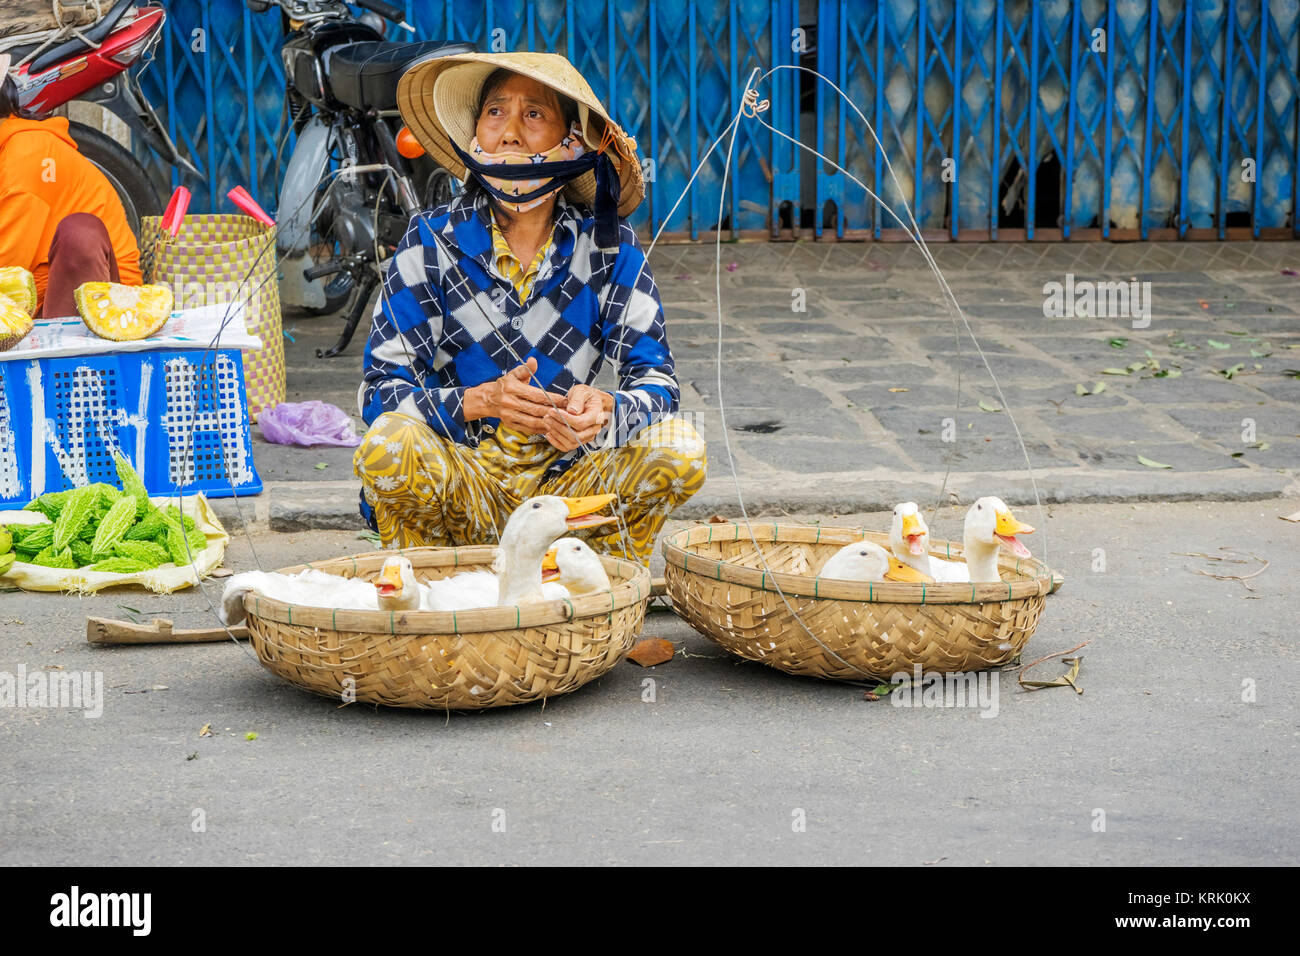 Royalty Free Stock Bild in hoher Qualität Hoi An, Vietnam Stockfoto